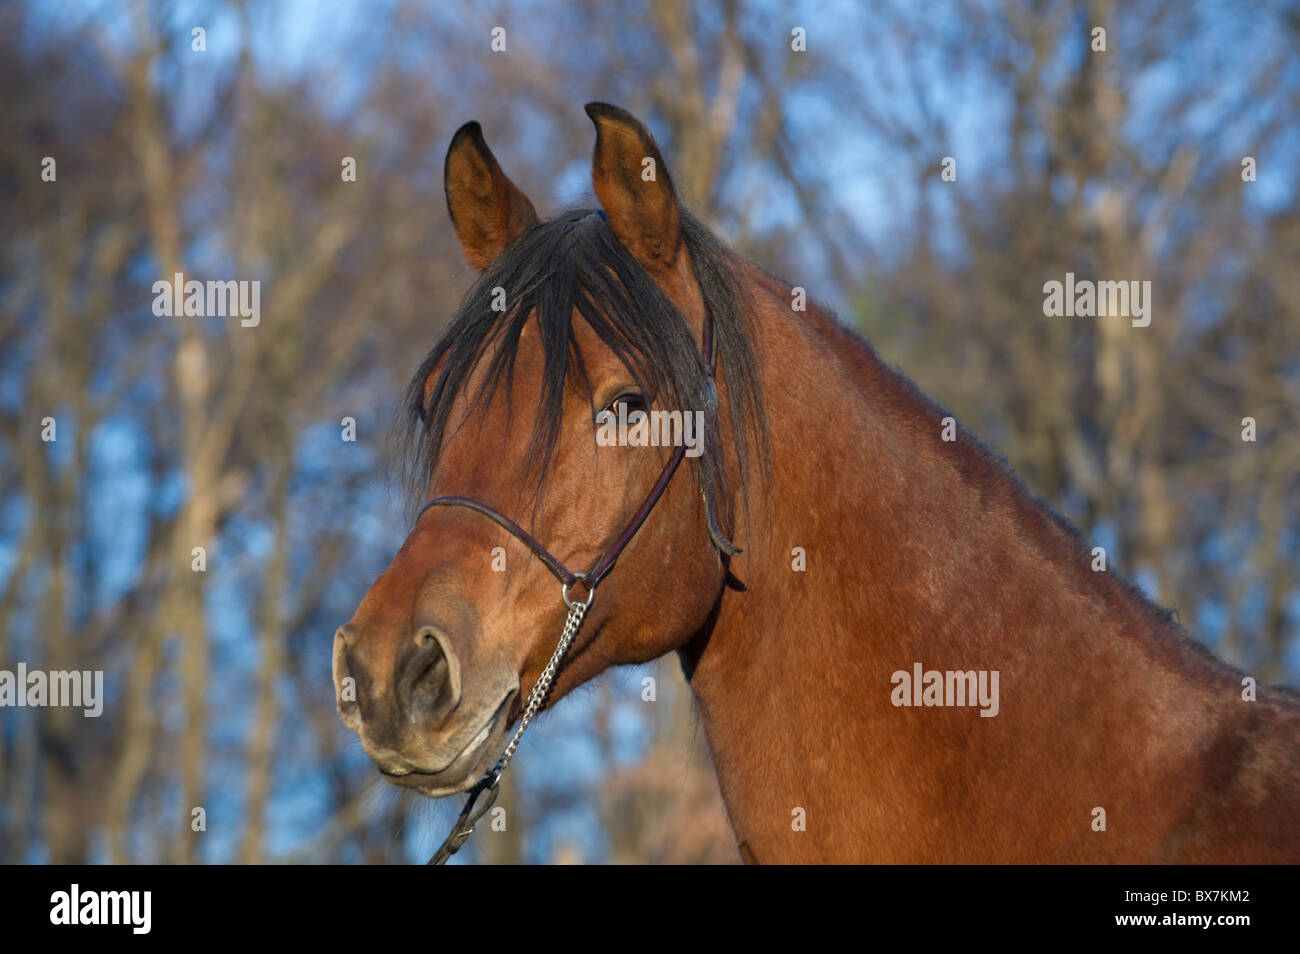 Beautiful Arabian horse in late evening golden light, head shot of purebred bay mare in winter coat. Stock Photo